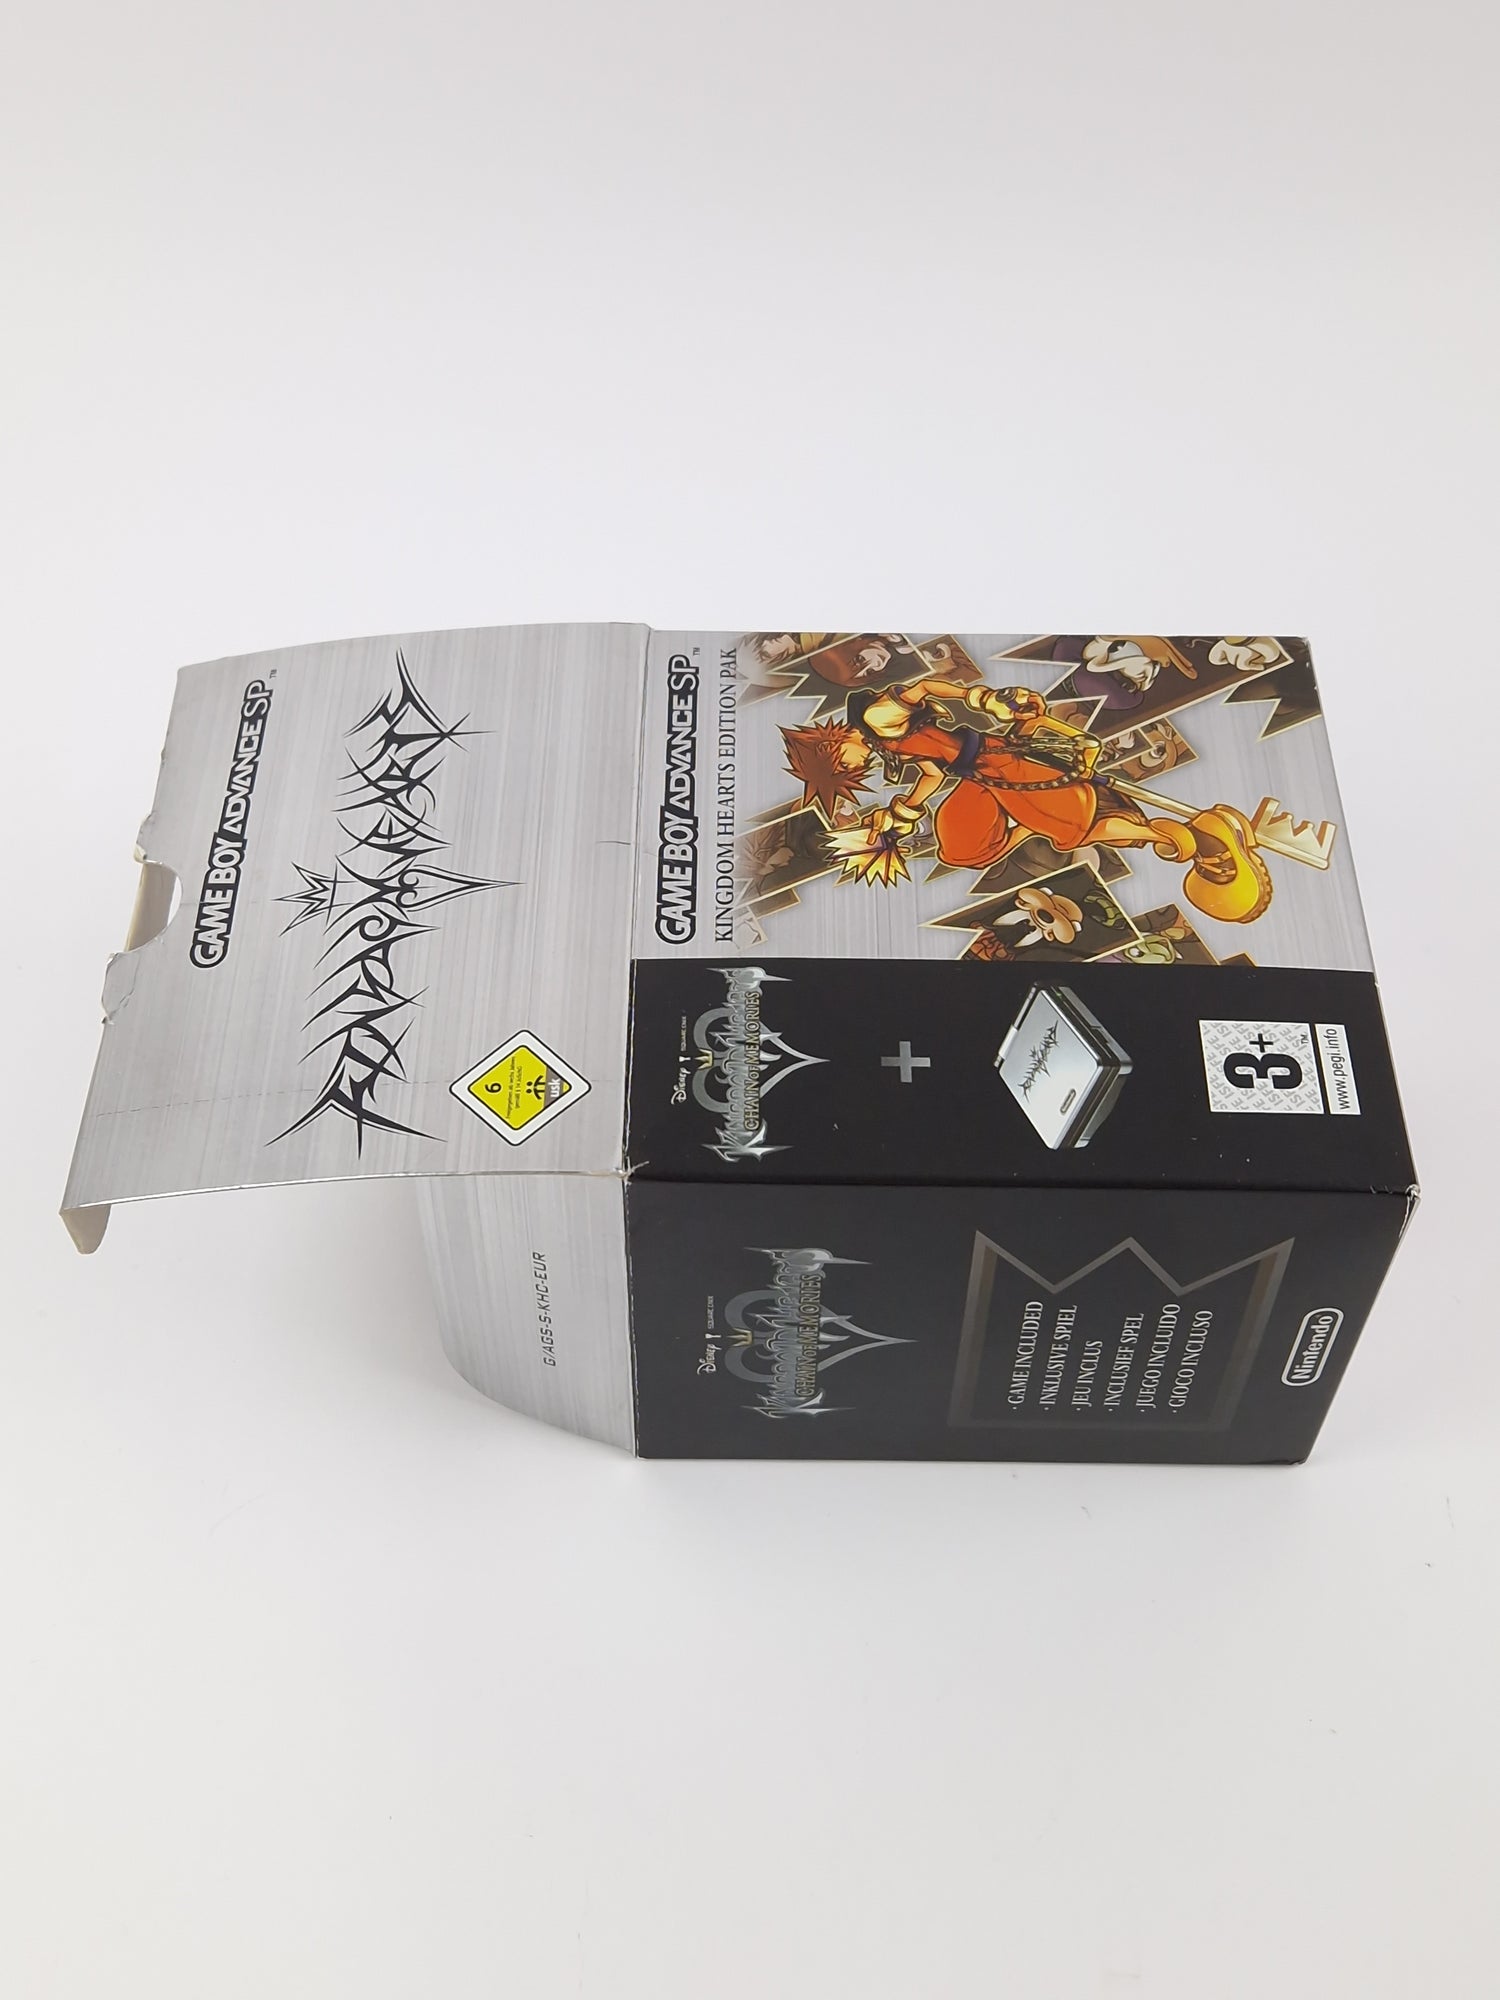 Nintendo Game Boy Advance SP Konsole : Kingsdom Hearts Edition Pak - OVP GBA PAL